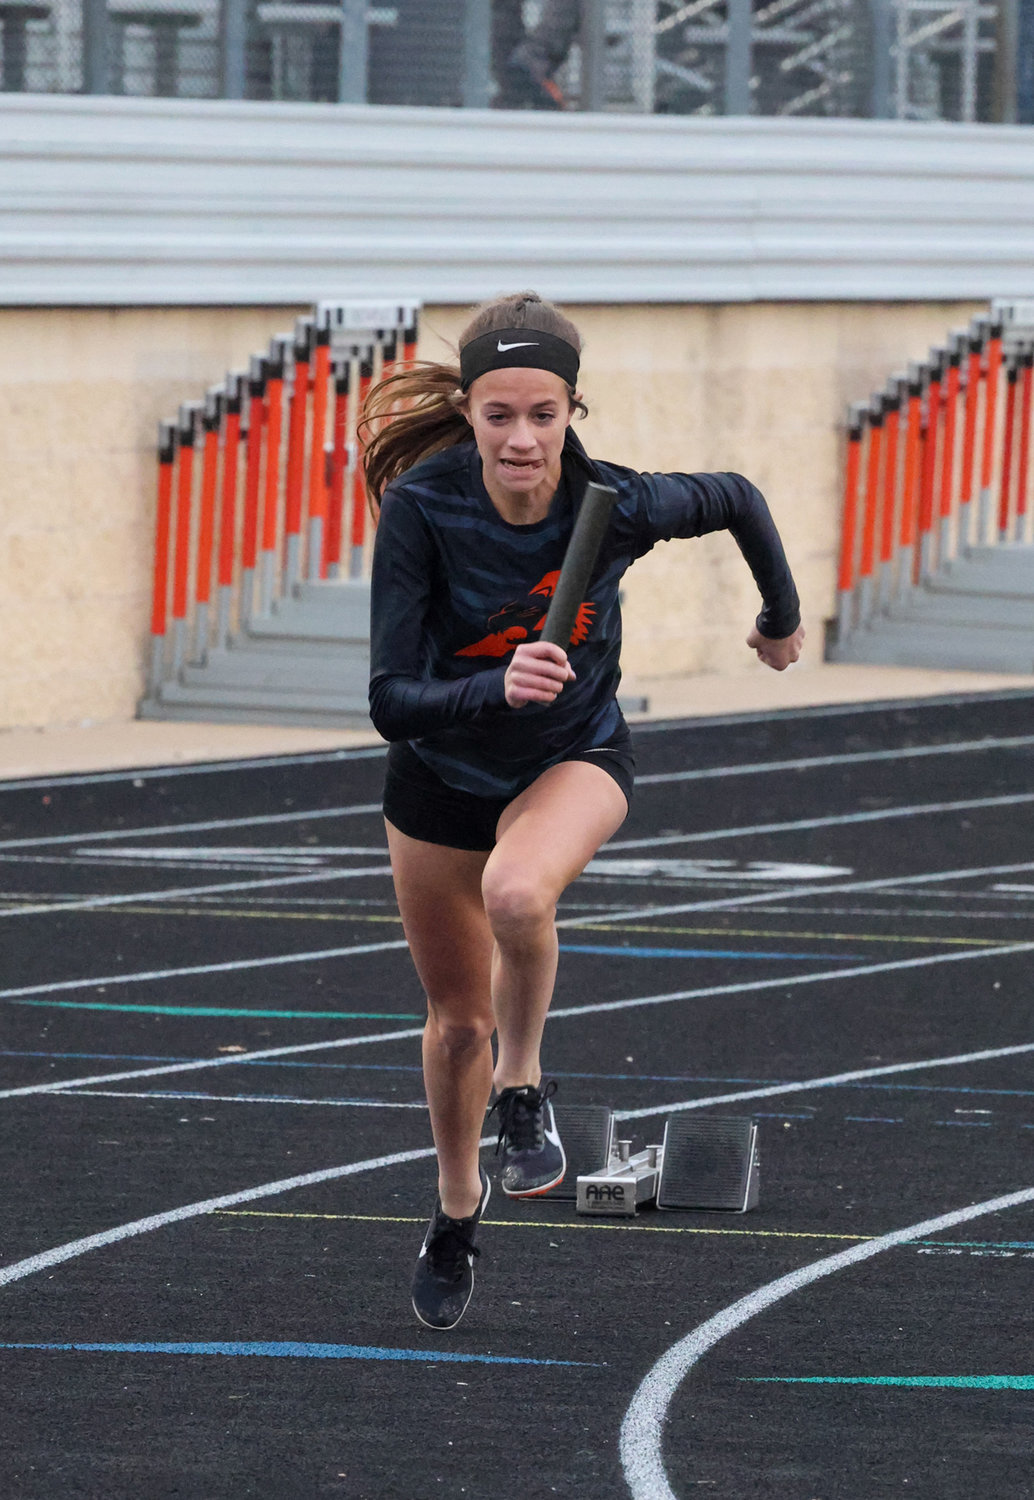 Emery Thompson runs her leg in the 1600 relay.